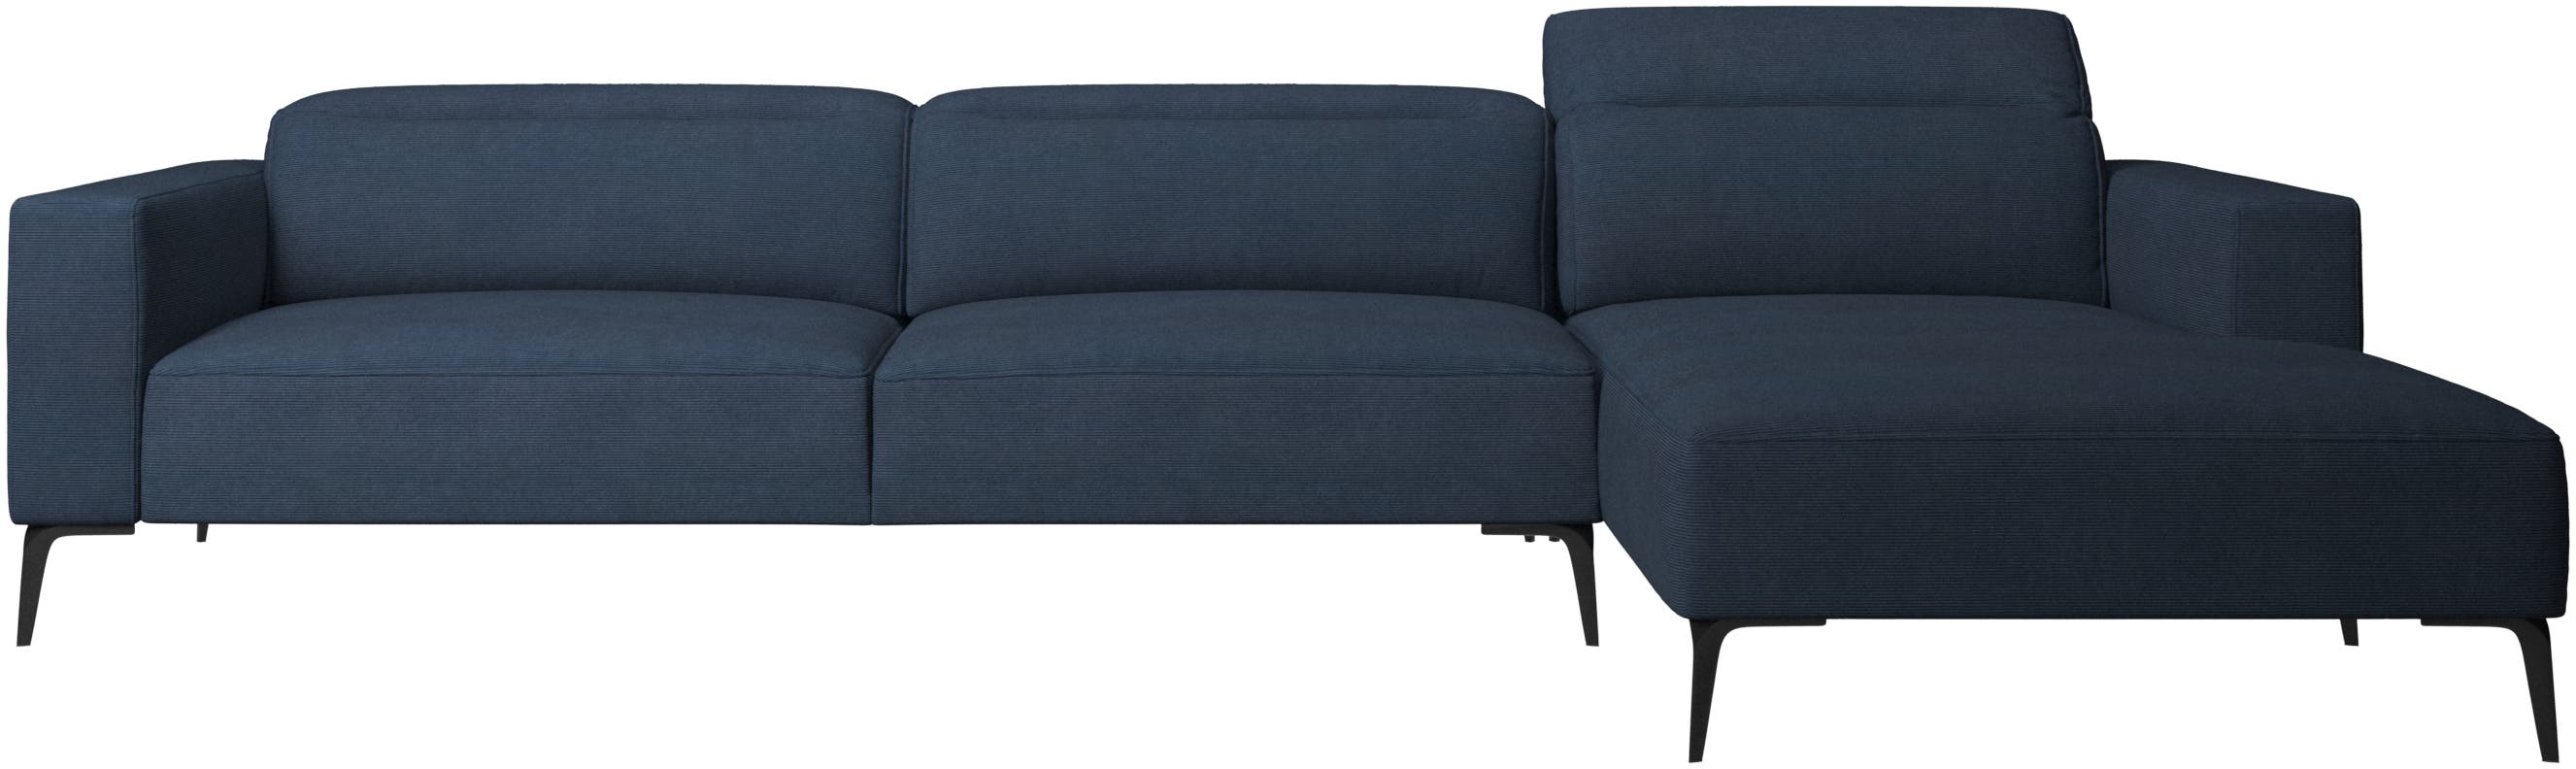 Zürich sofá com módulo chaise-longue